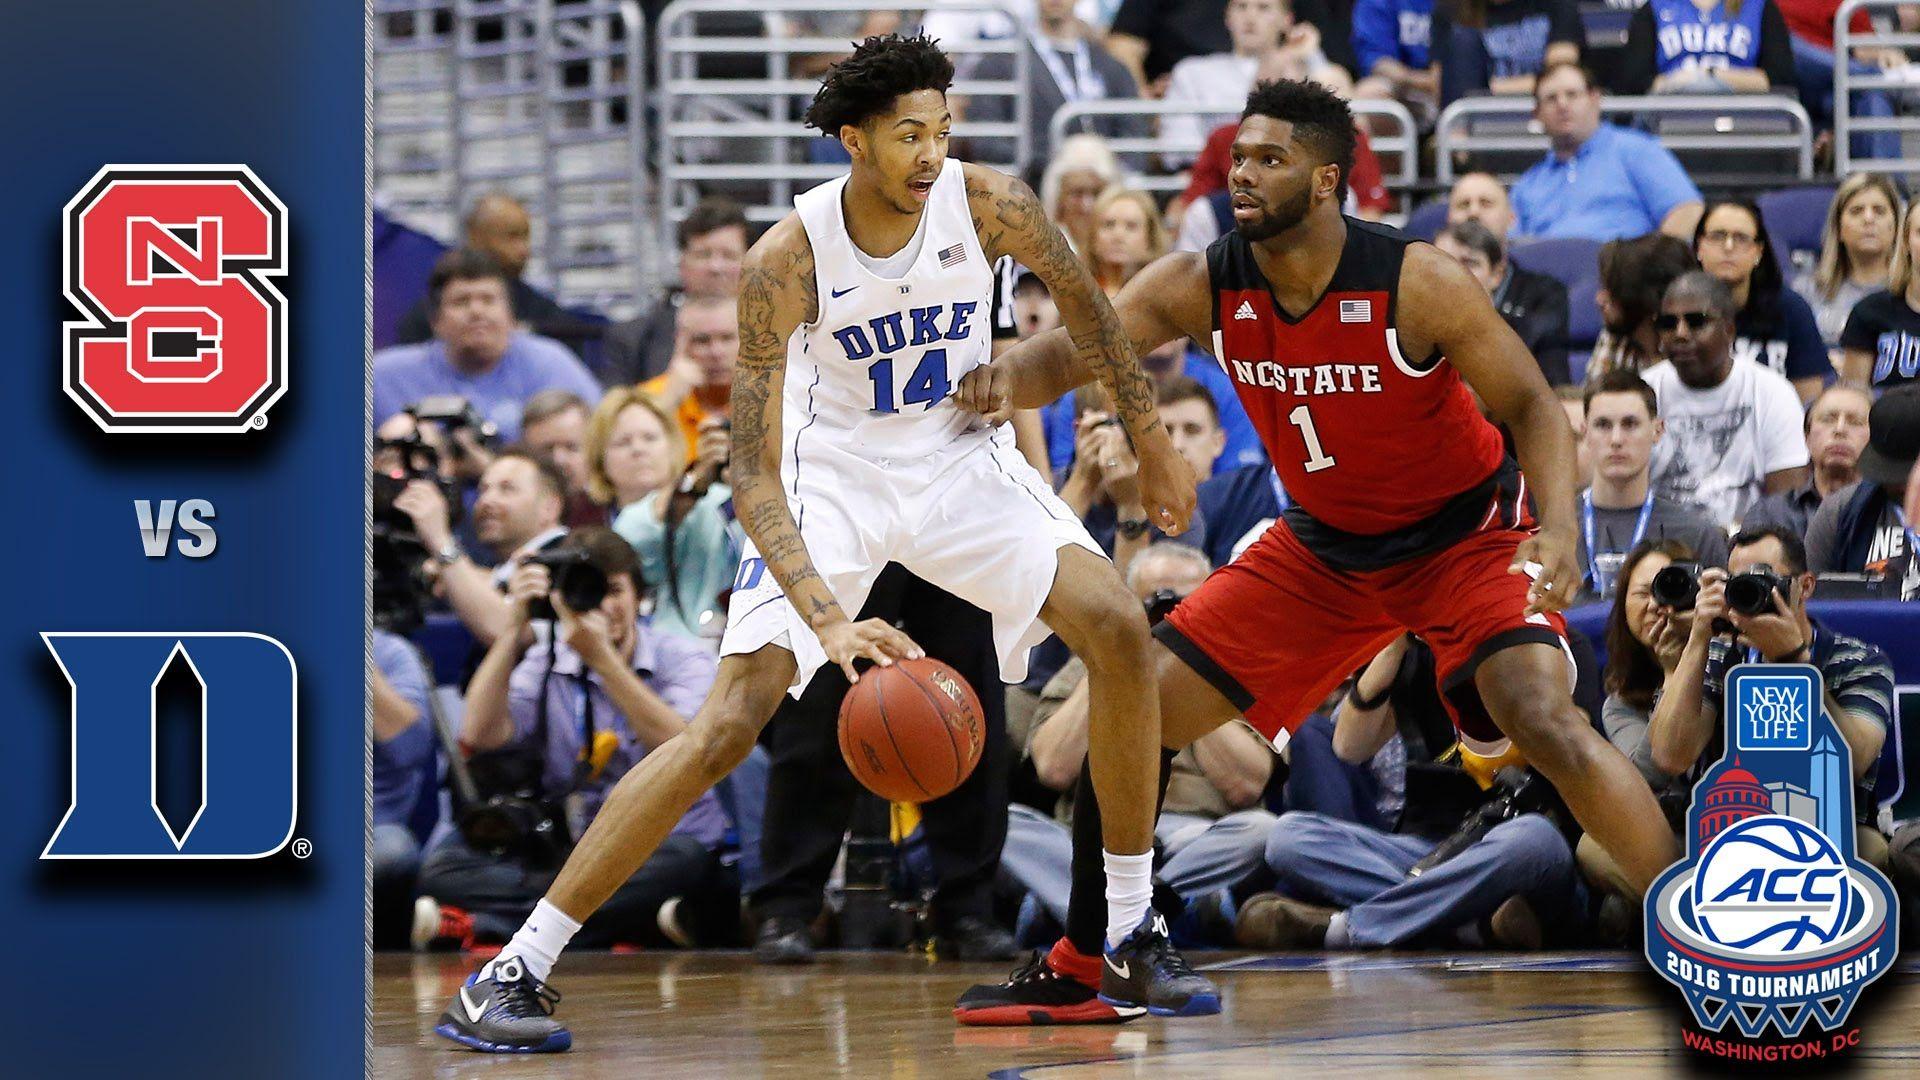 NC State vs. Duke 2016 ACC Basketball Tournament Highlights